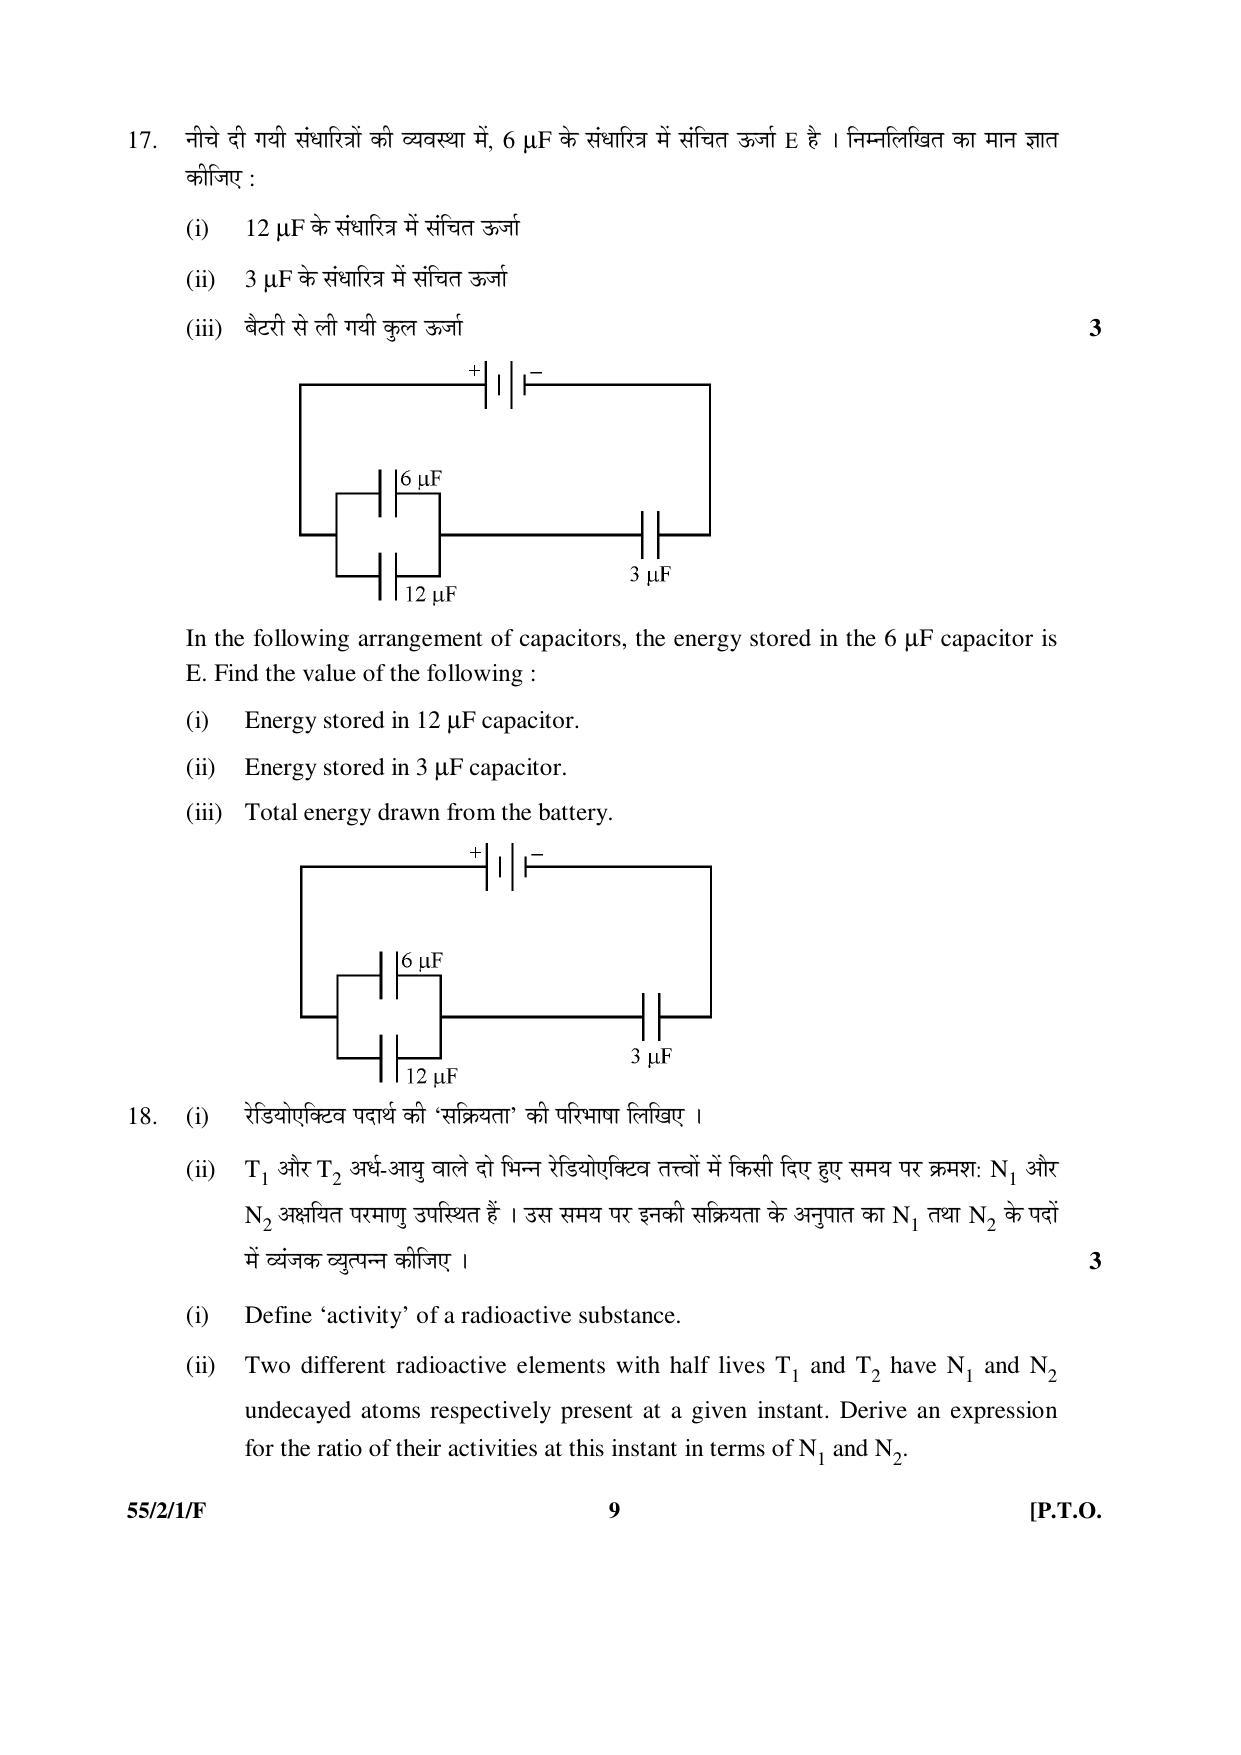 CBSE Class 12 55-2-1-F _Physics_SET-1 2016 Question Paper - Page 9